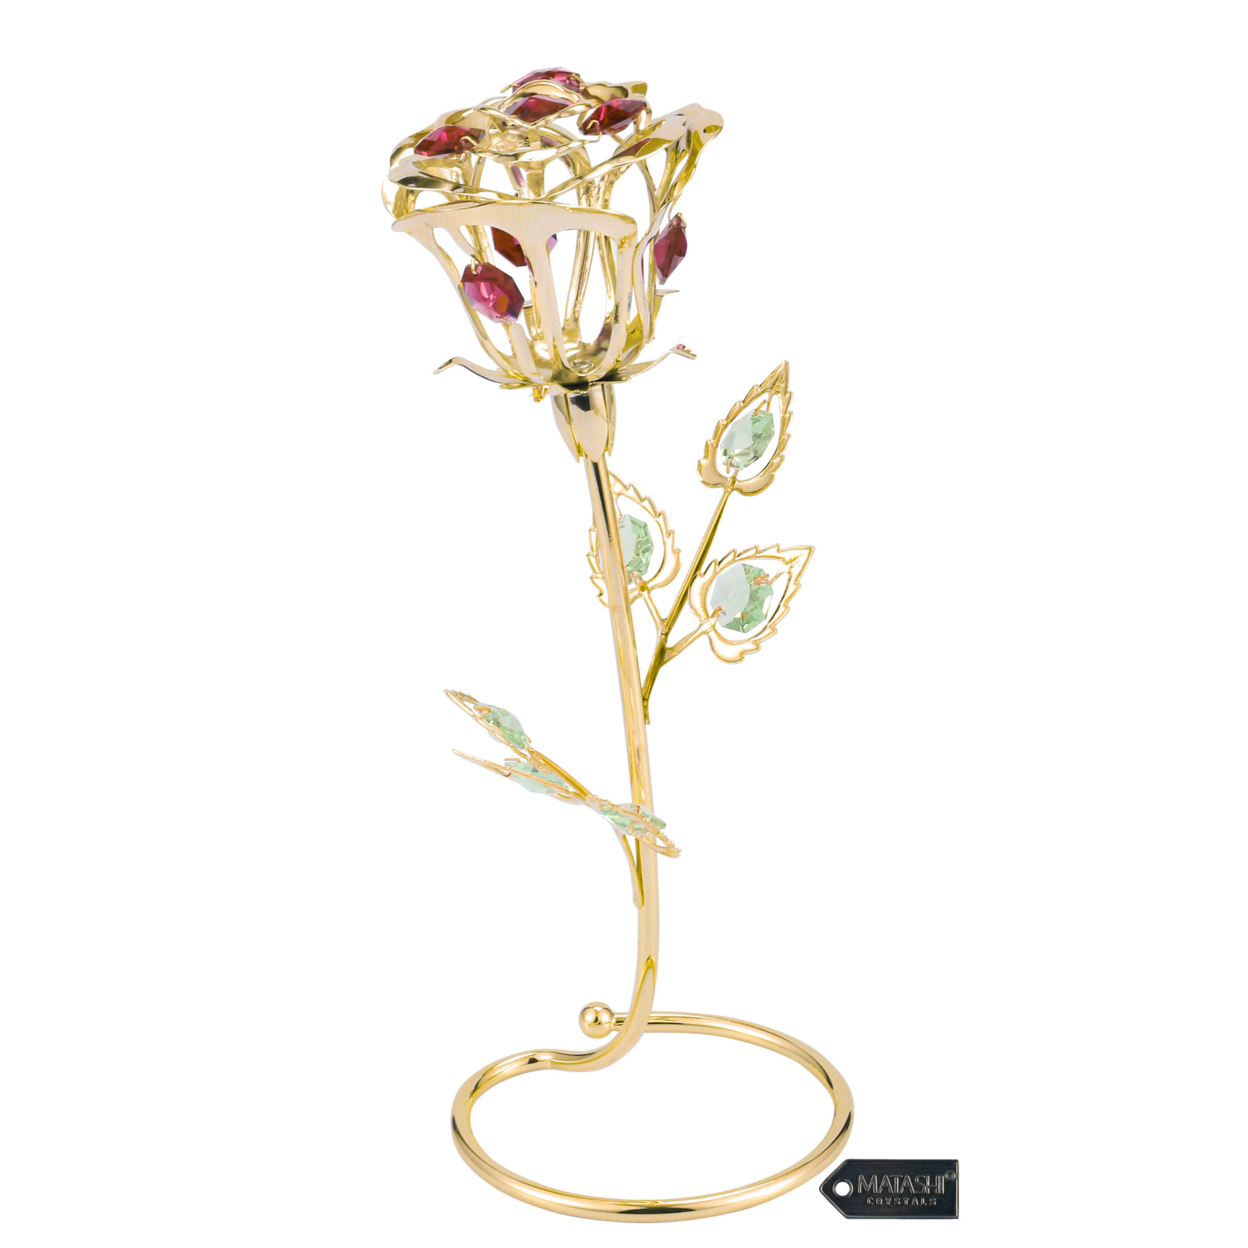 Matashi 24K Gold Plated Rose Flower Tabletop Ornament W/ Red Pink & Green Crystals Metal Floral Arrangement